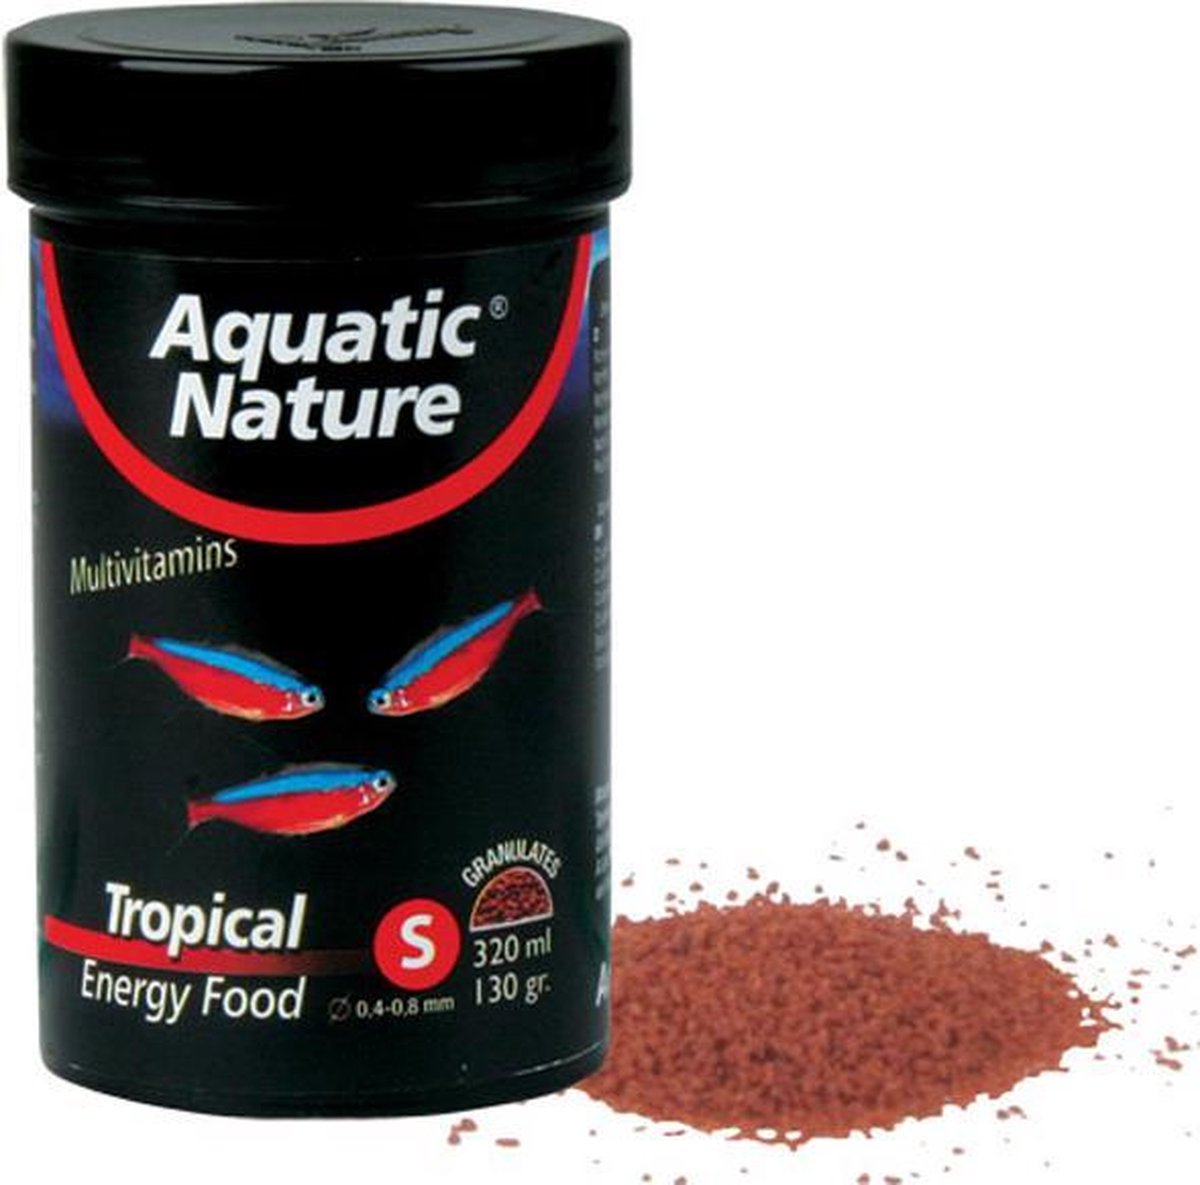 Aquatic Nature Tropical Energy Food S 320ml